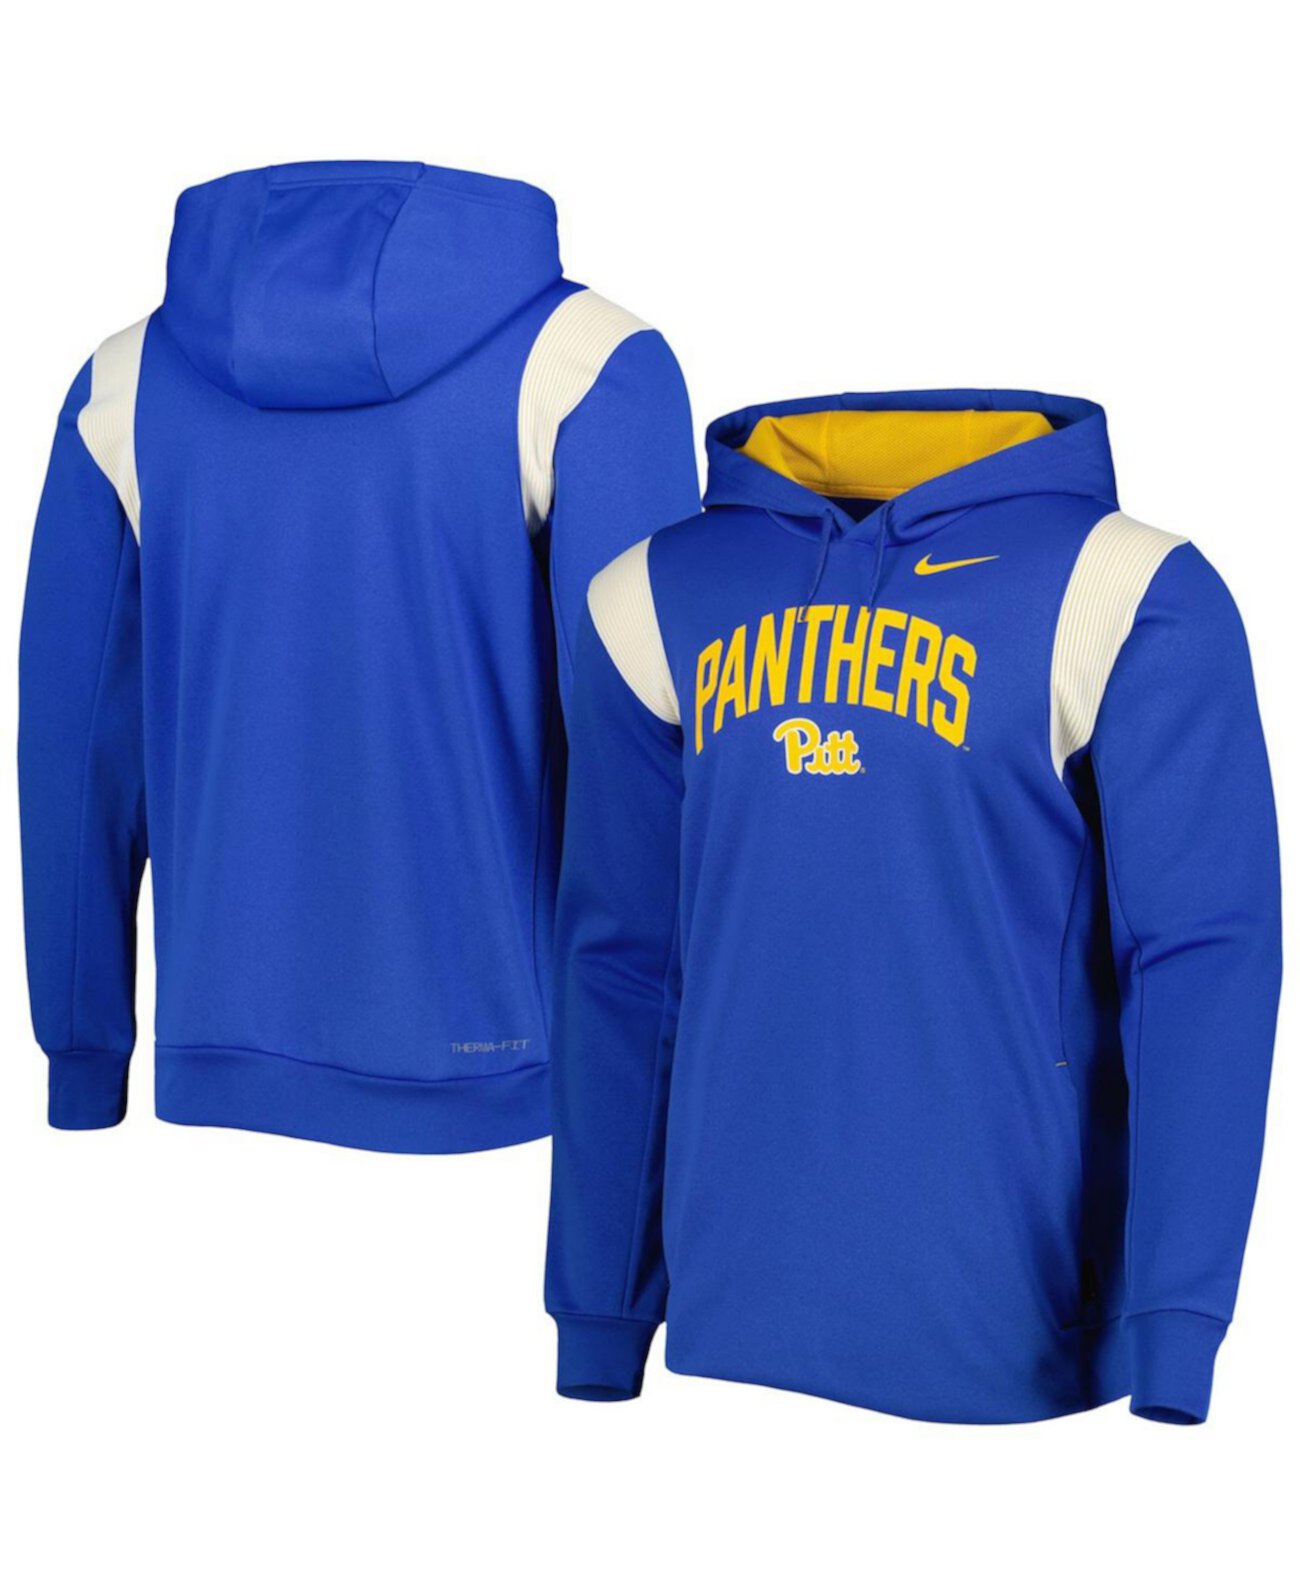 Мужской пуловер с капюшоном Royal Pitt Panthers 2022 Sideline Performance Nike